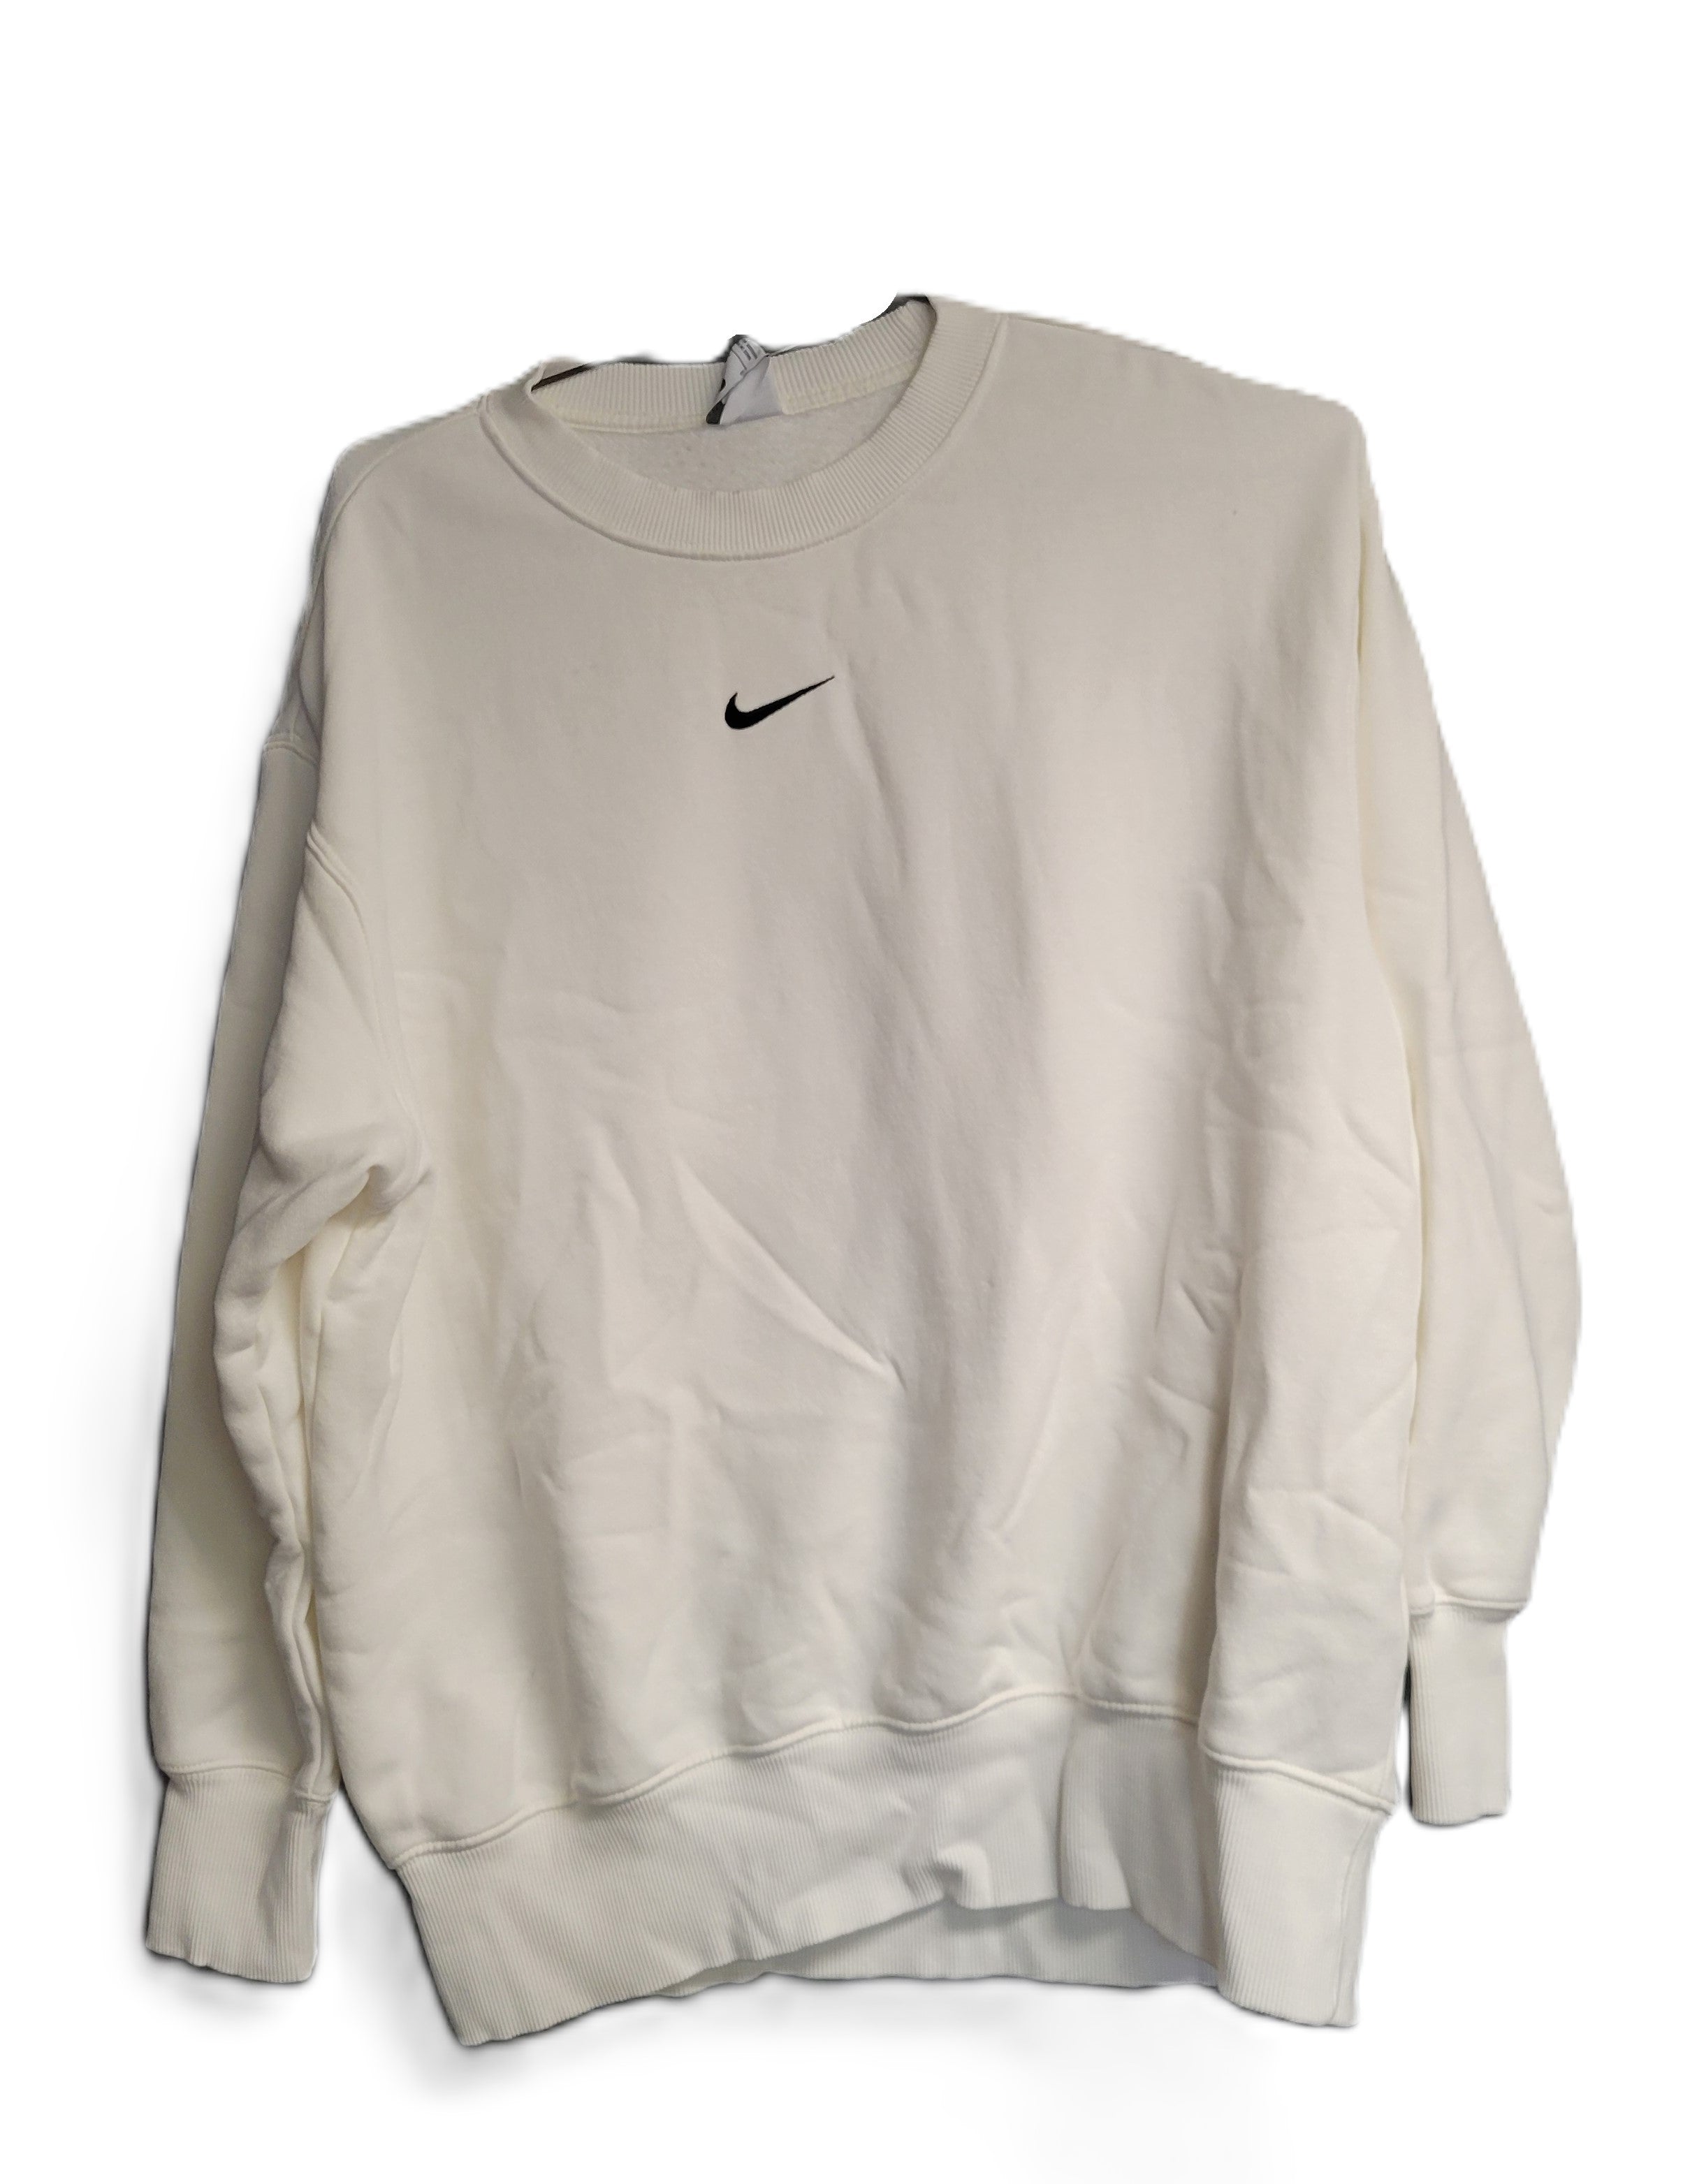 Nike NSW Fleece Crewneck Sweatshirt in Sail & Black Size Small